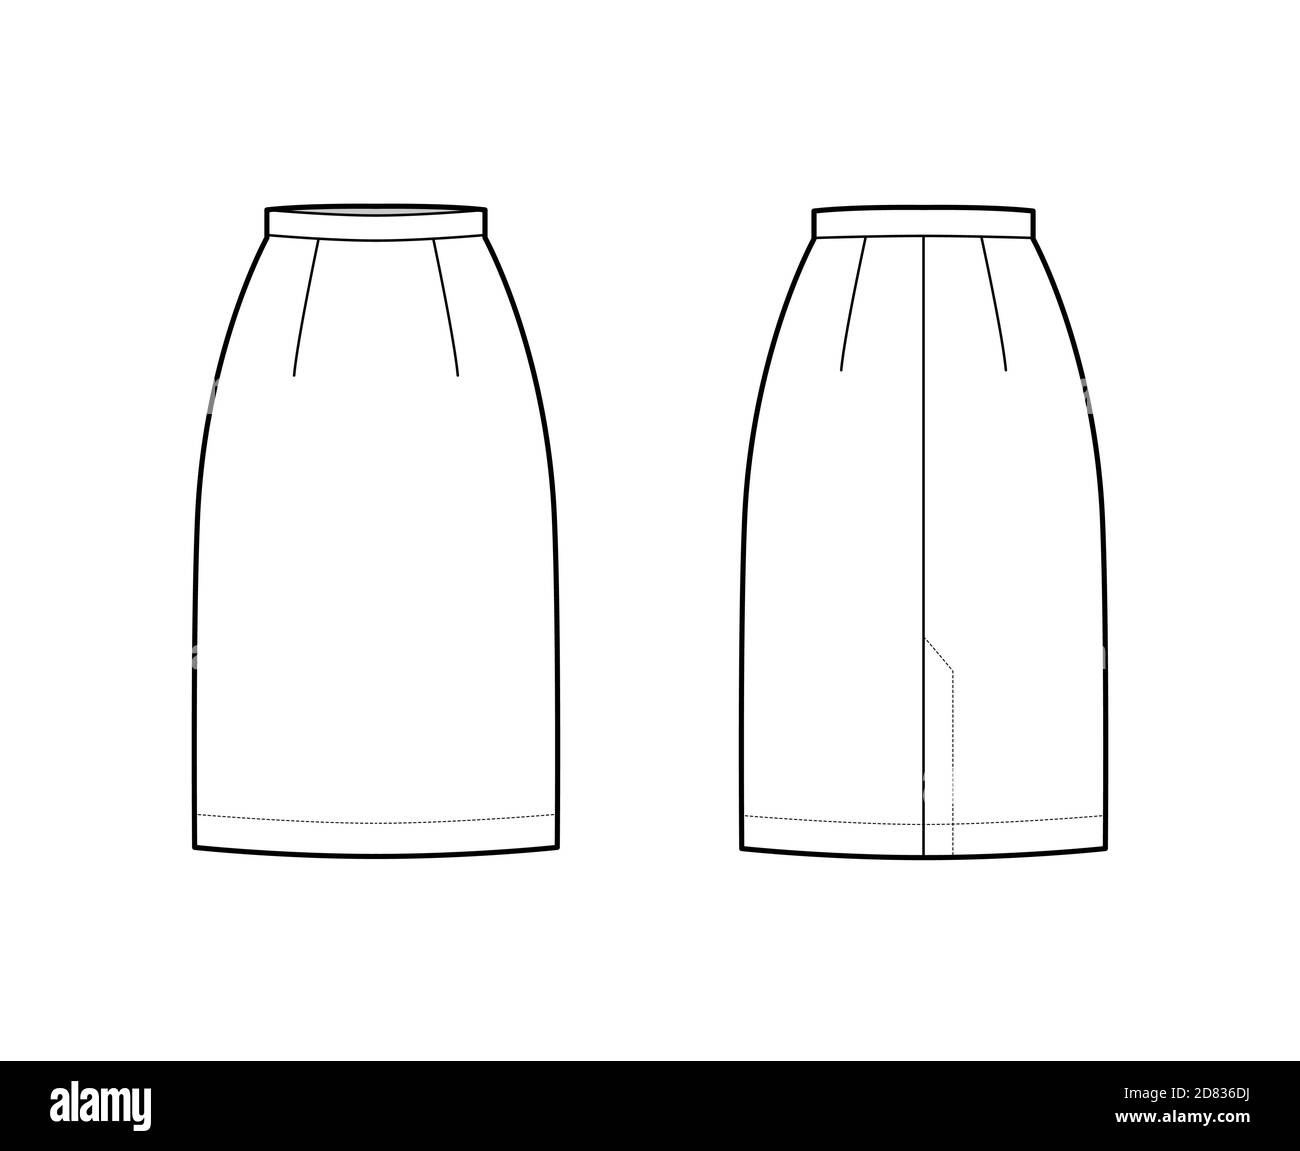 Skirt sheath straight technical fashion illustration with knee lengths ...